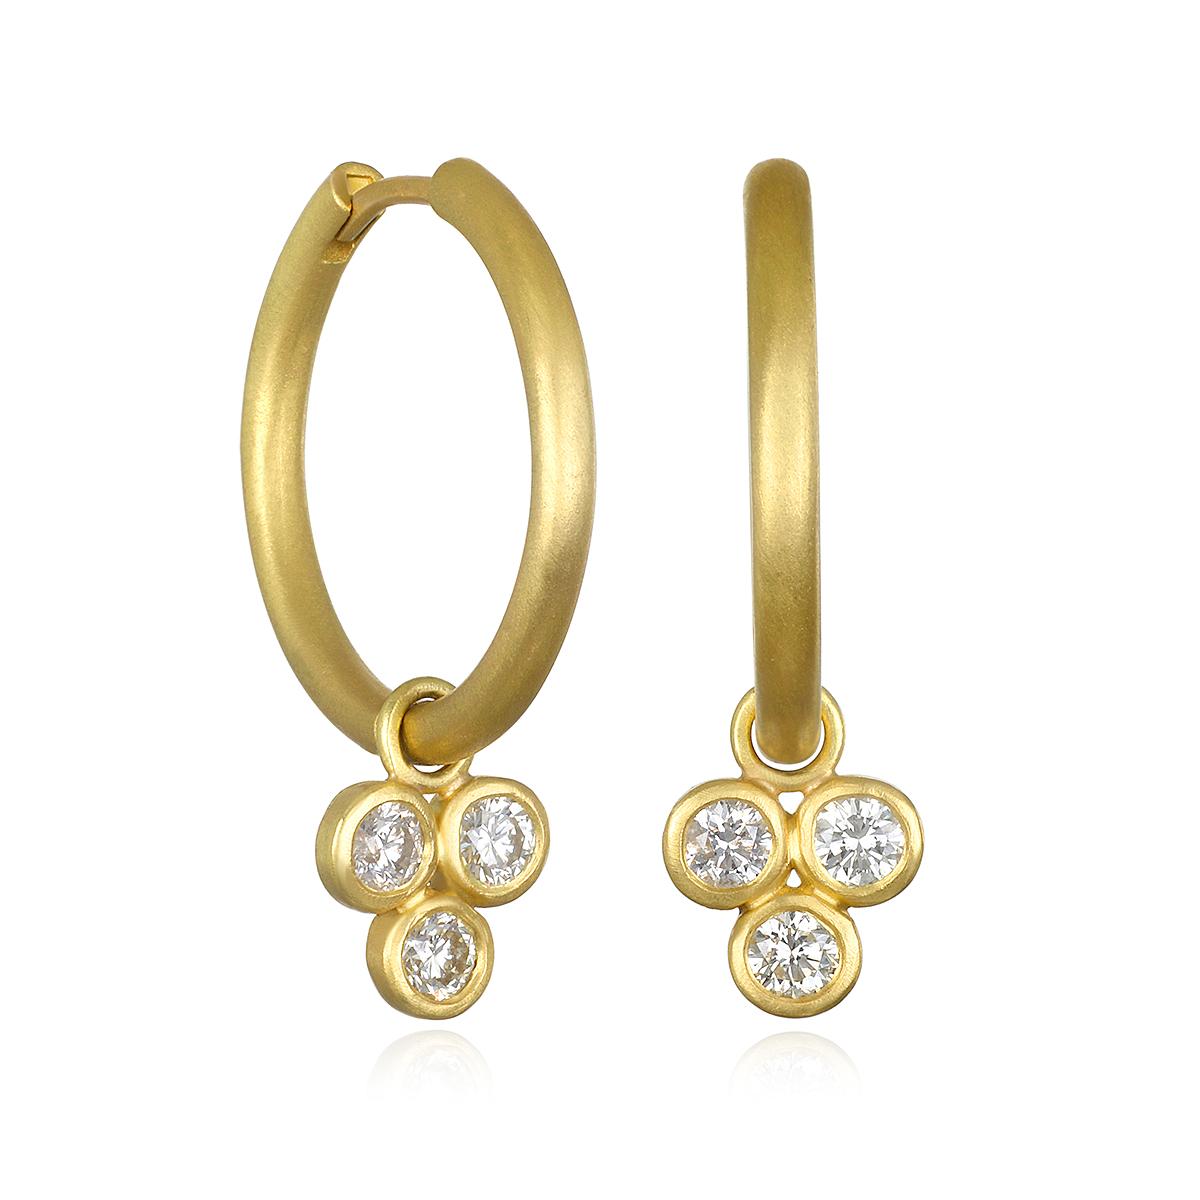 Contemporary Faye Kim 18 Karat Gold Large Hinged Hoop Earrings